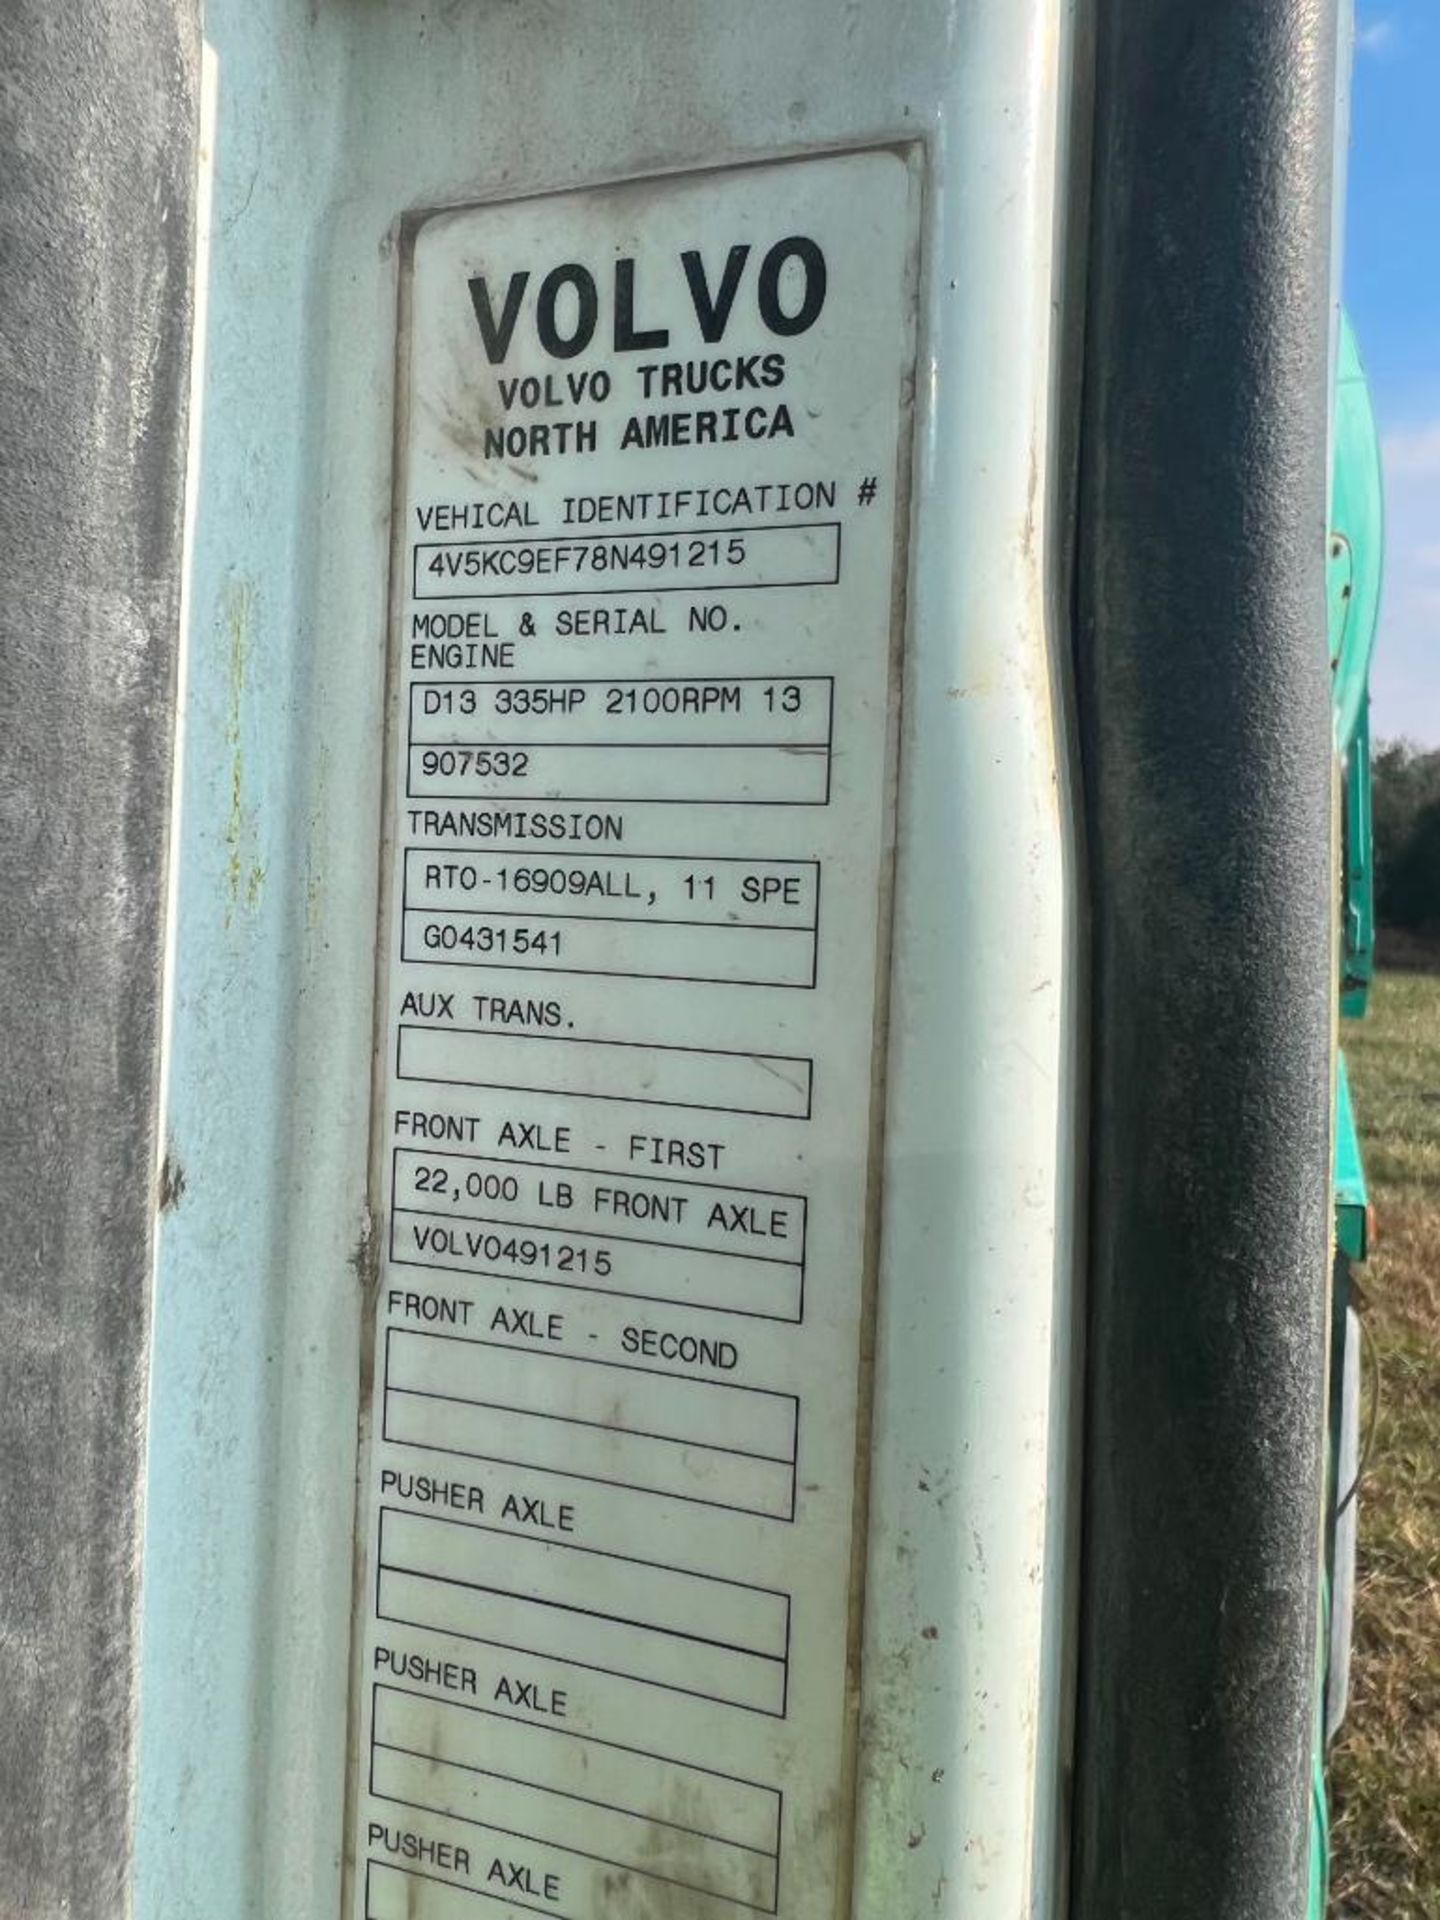 2008 Volvo Concrete Mixer, VIN #4V5KC9EF78N491215, Miles 123,660, Eaton Fuller 9 Speed RTO-16909ALL, - Image 6 of 47